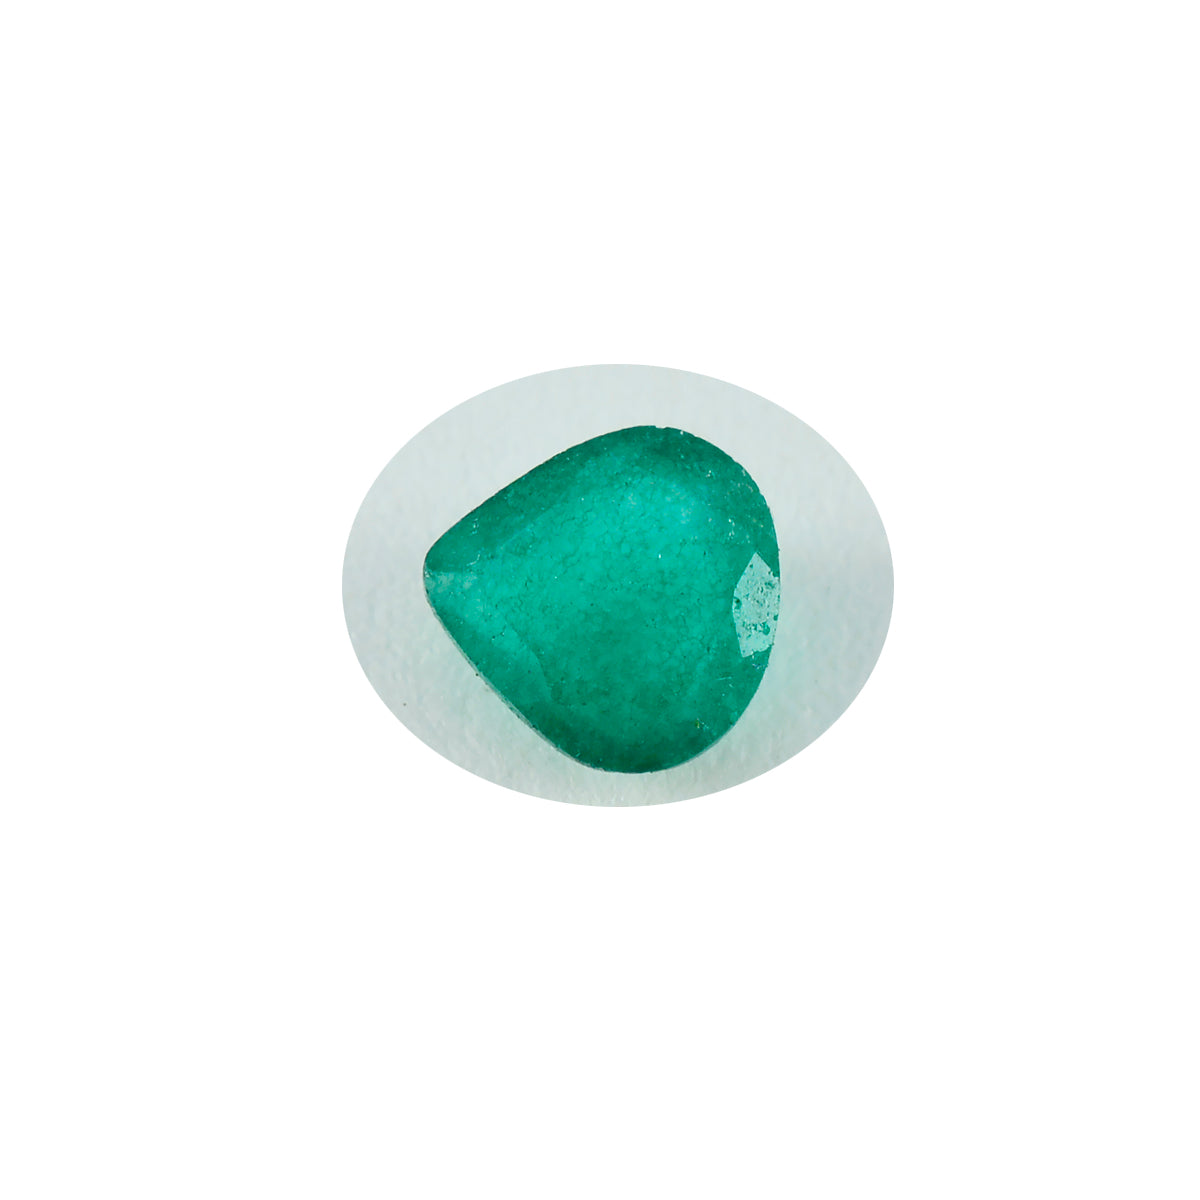 Riyogems 1PC Natural Green Jasper Faceted 12x12 mm Heart Shape A+1 Quality Gems